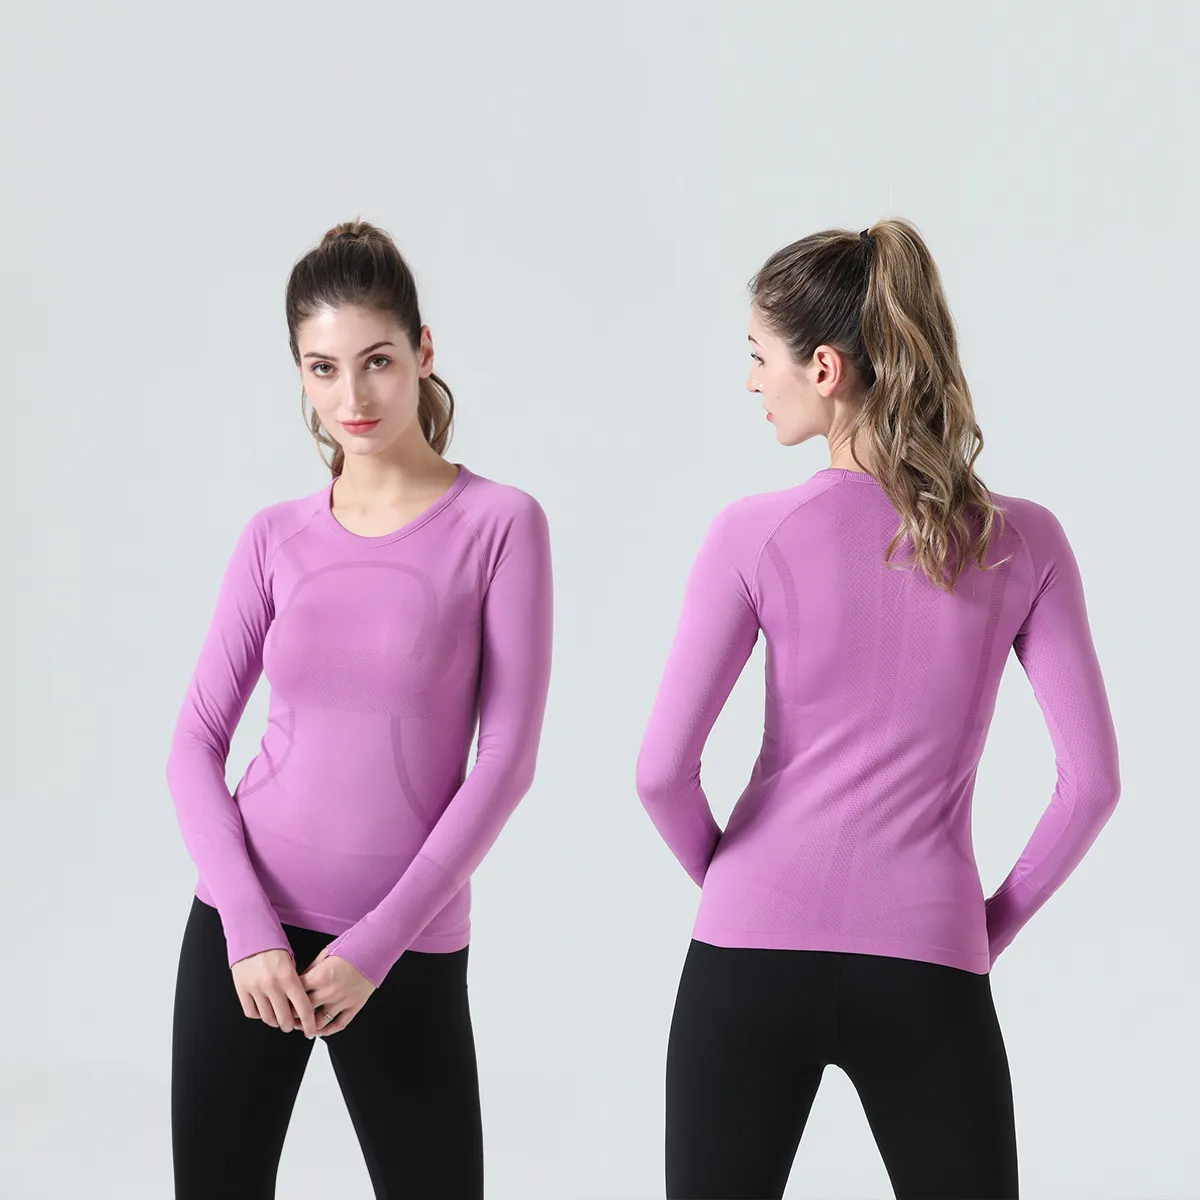 sweatshirt LL yoga long -sleeved 2.0 long -sleeved T-shirt yoga clothing female circle leading shelter thin fitness yoga running sportswear